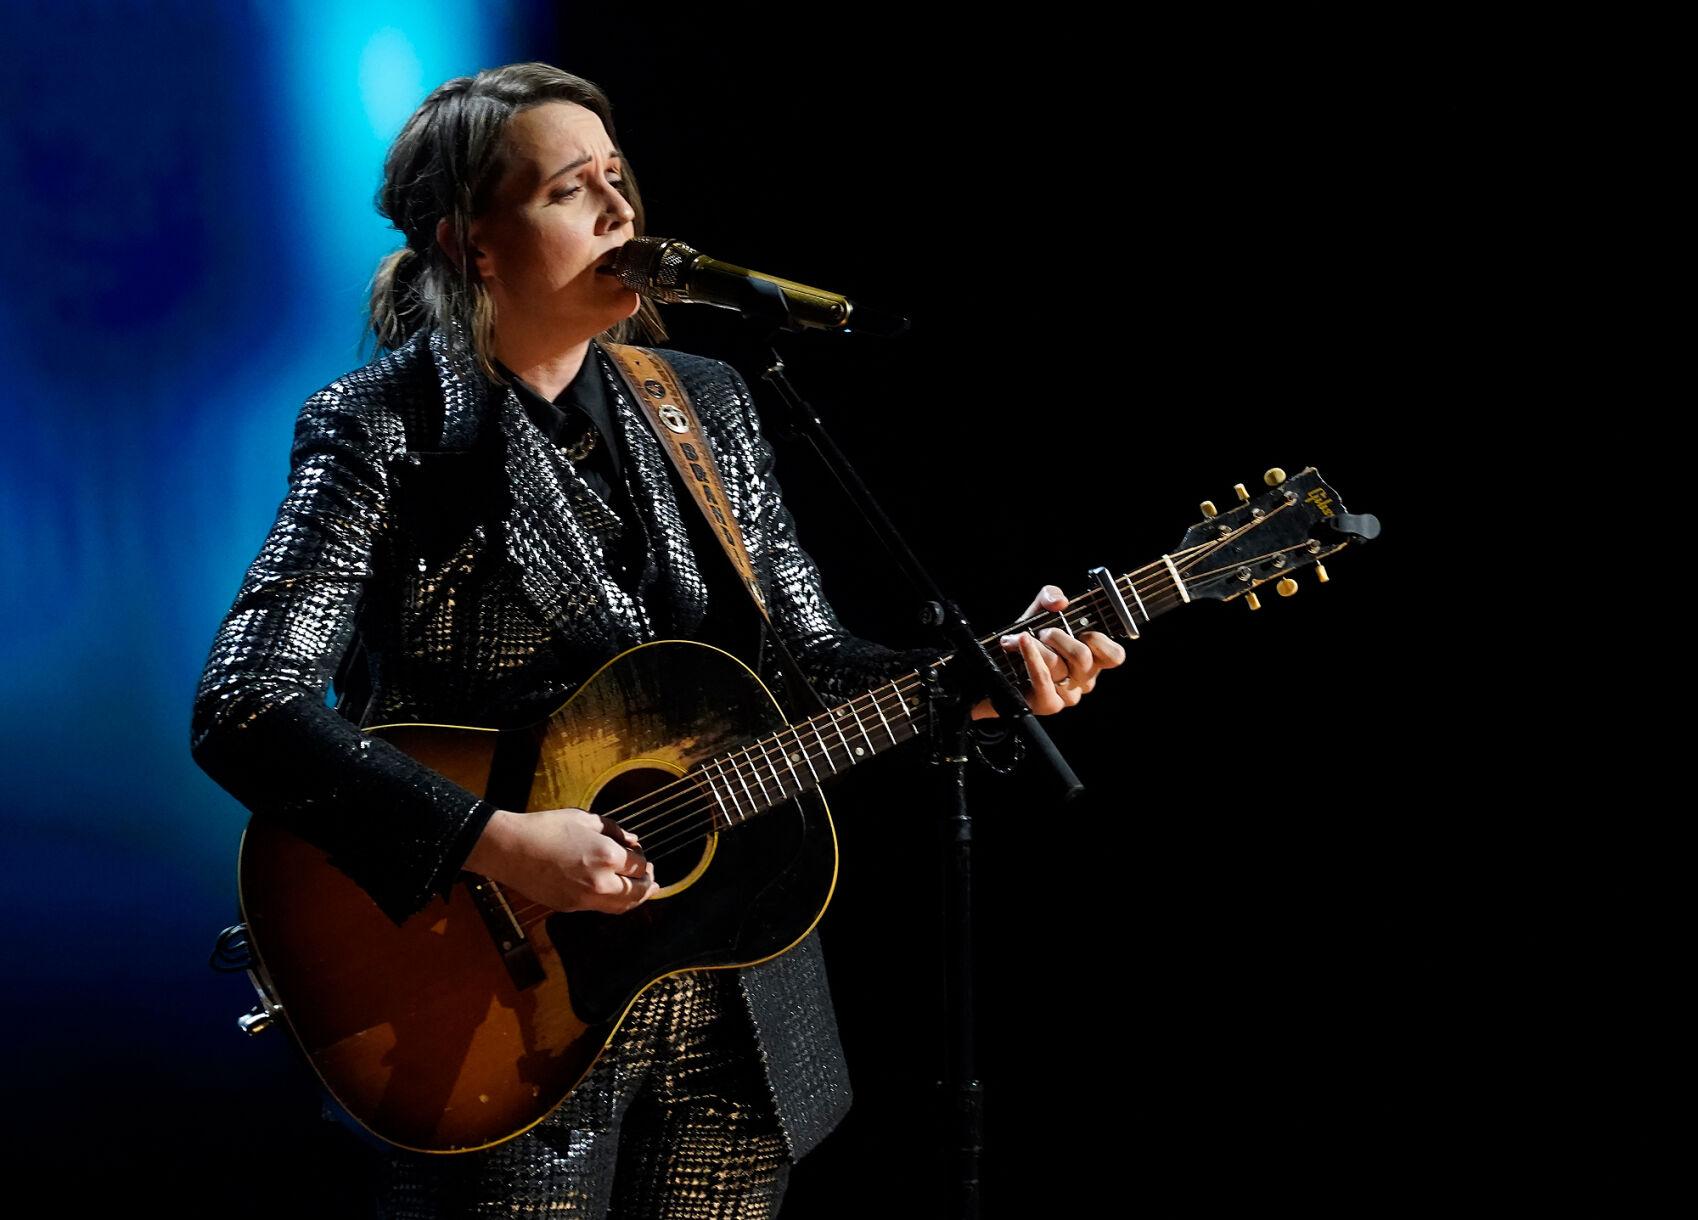 Brandi Carlile performs at the Grammys